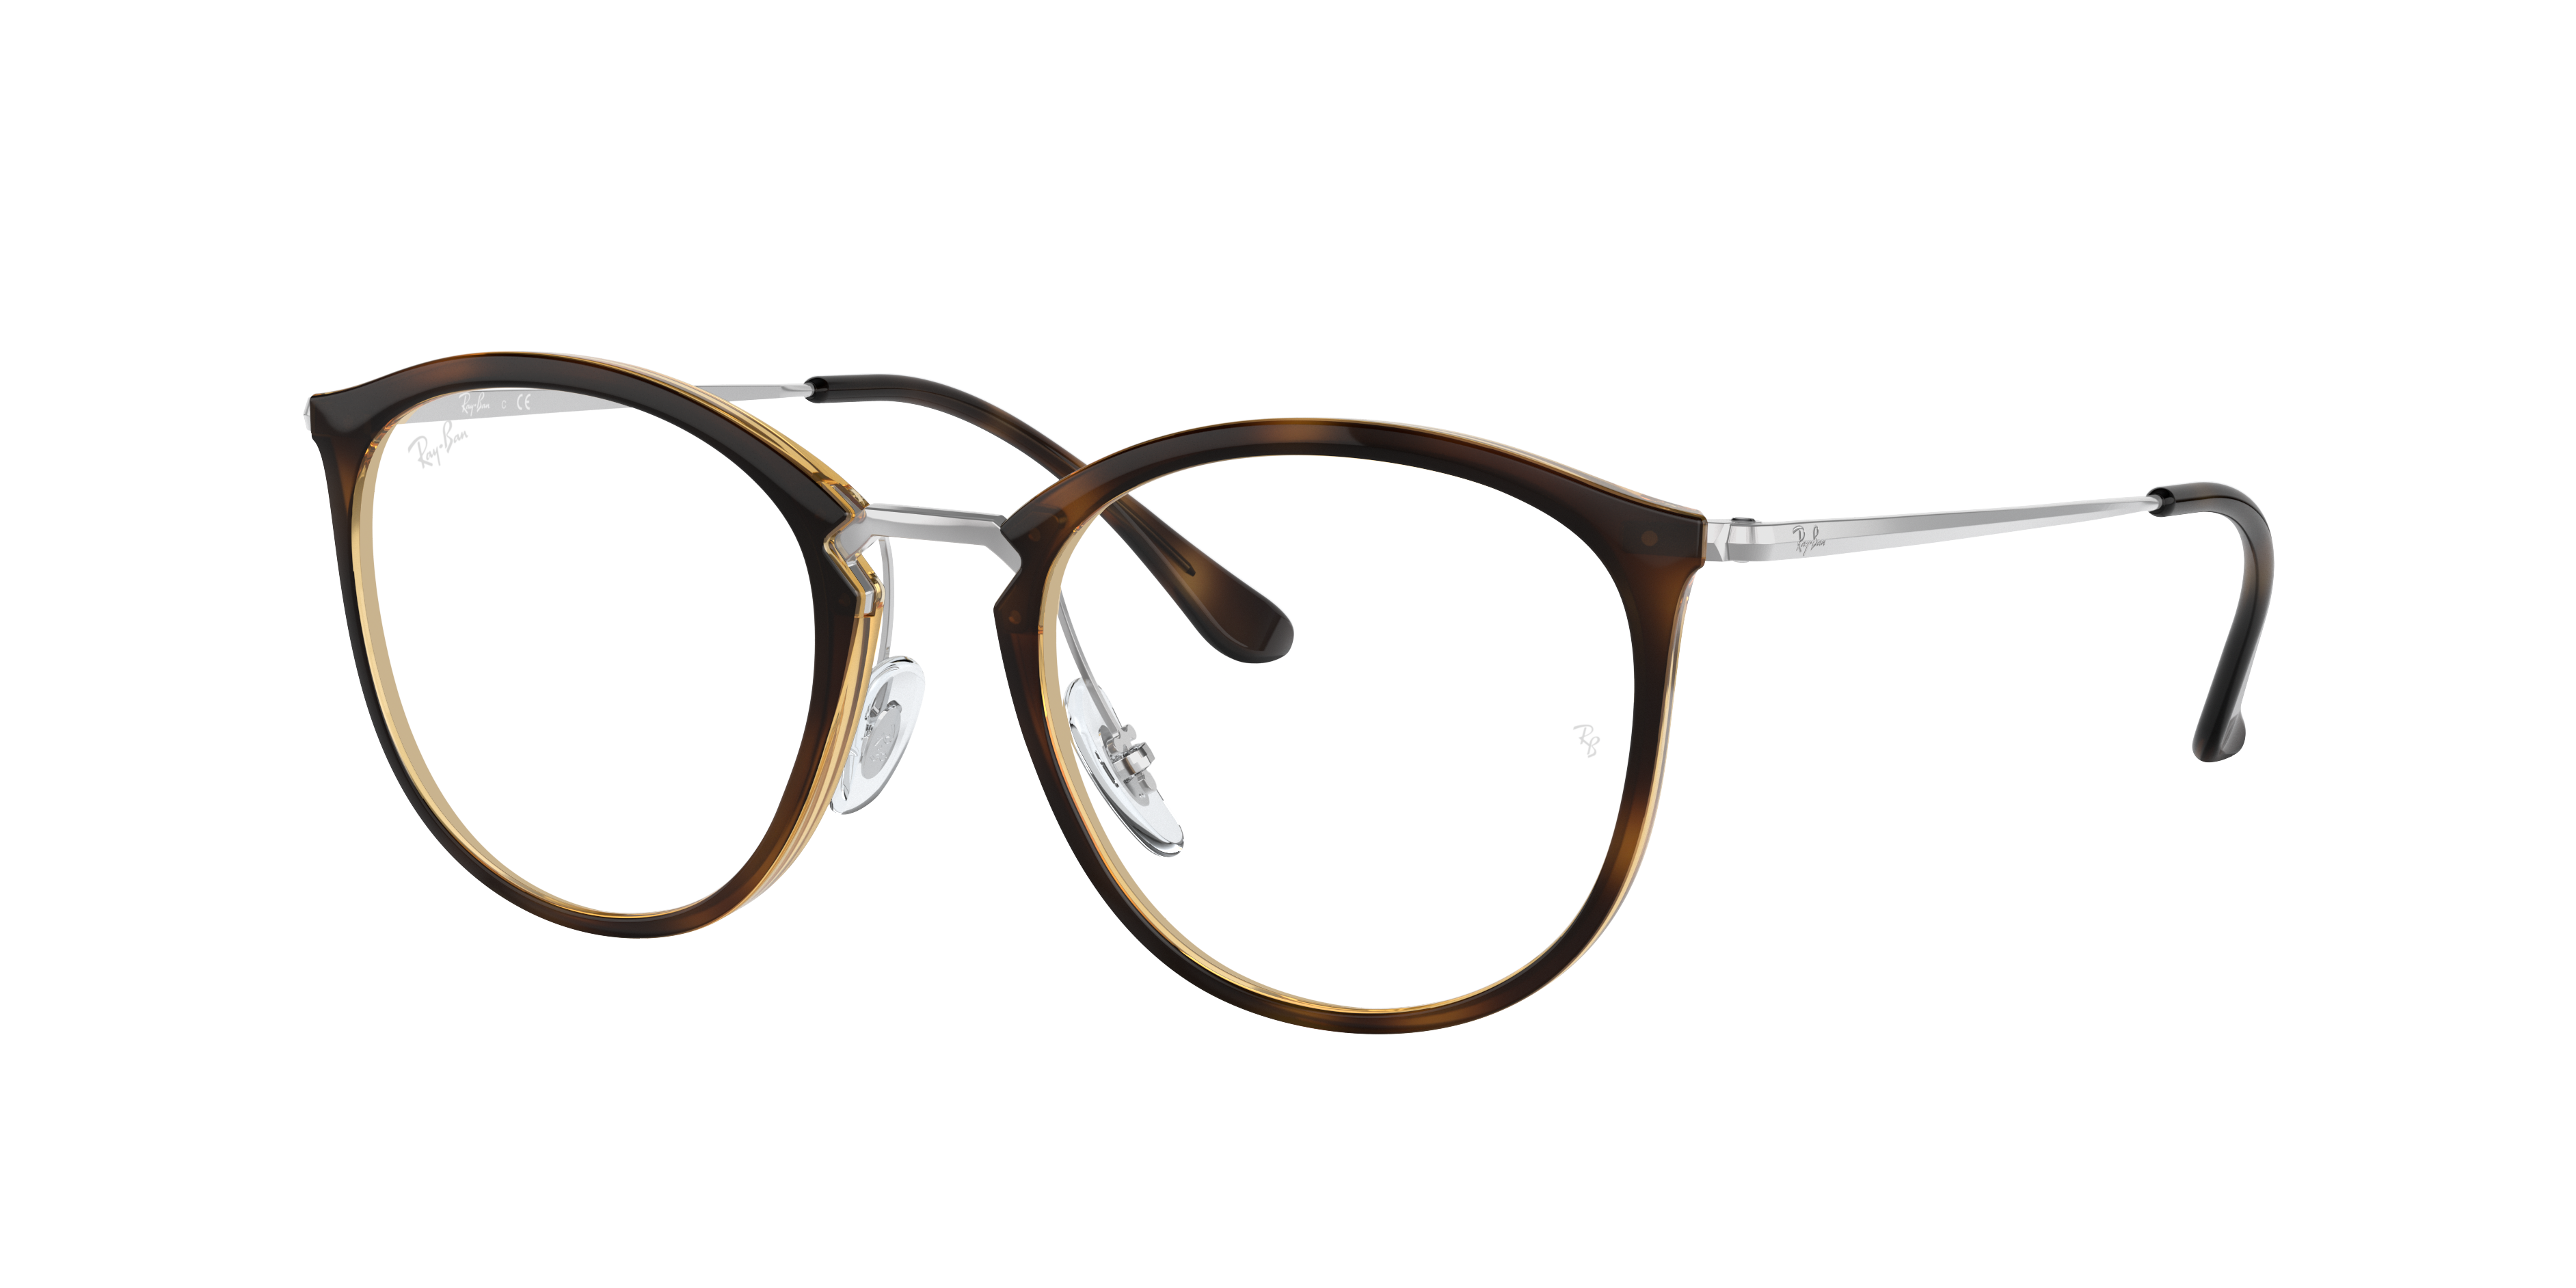 Rb7140 Eyeglasses With Tortoise Frame Ray Ban